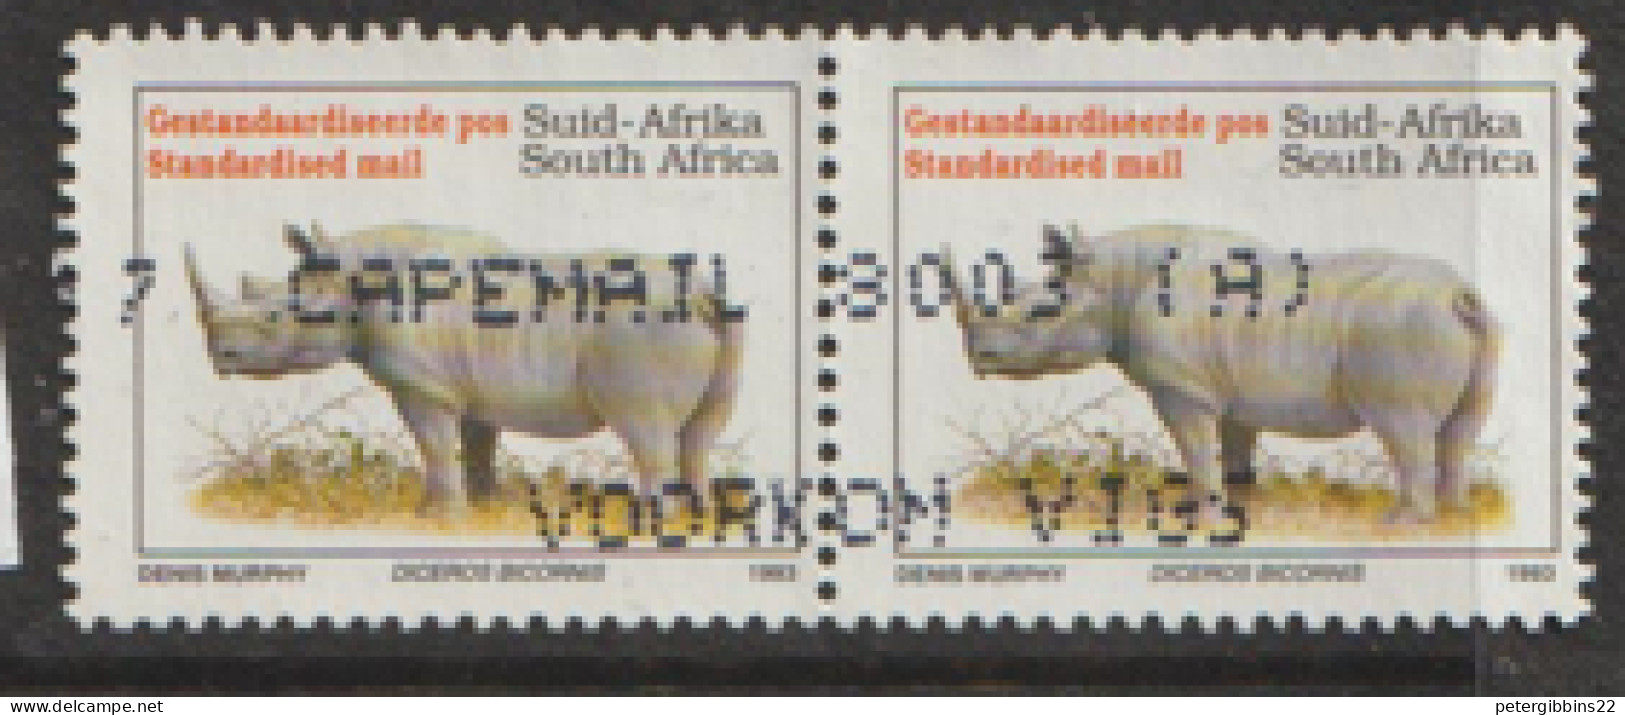 South Africa  1993  SG 821c White  Rhino  Standard Postage   Fine Used Pair - Usati